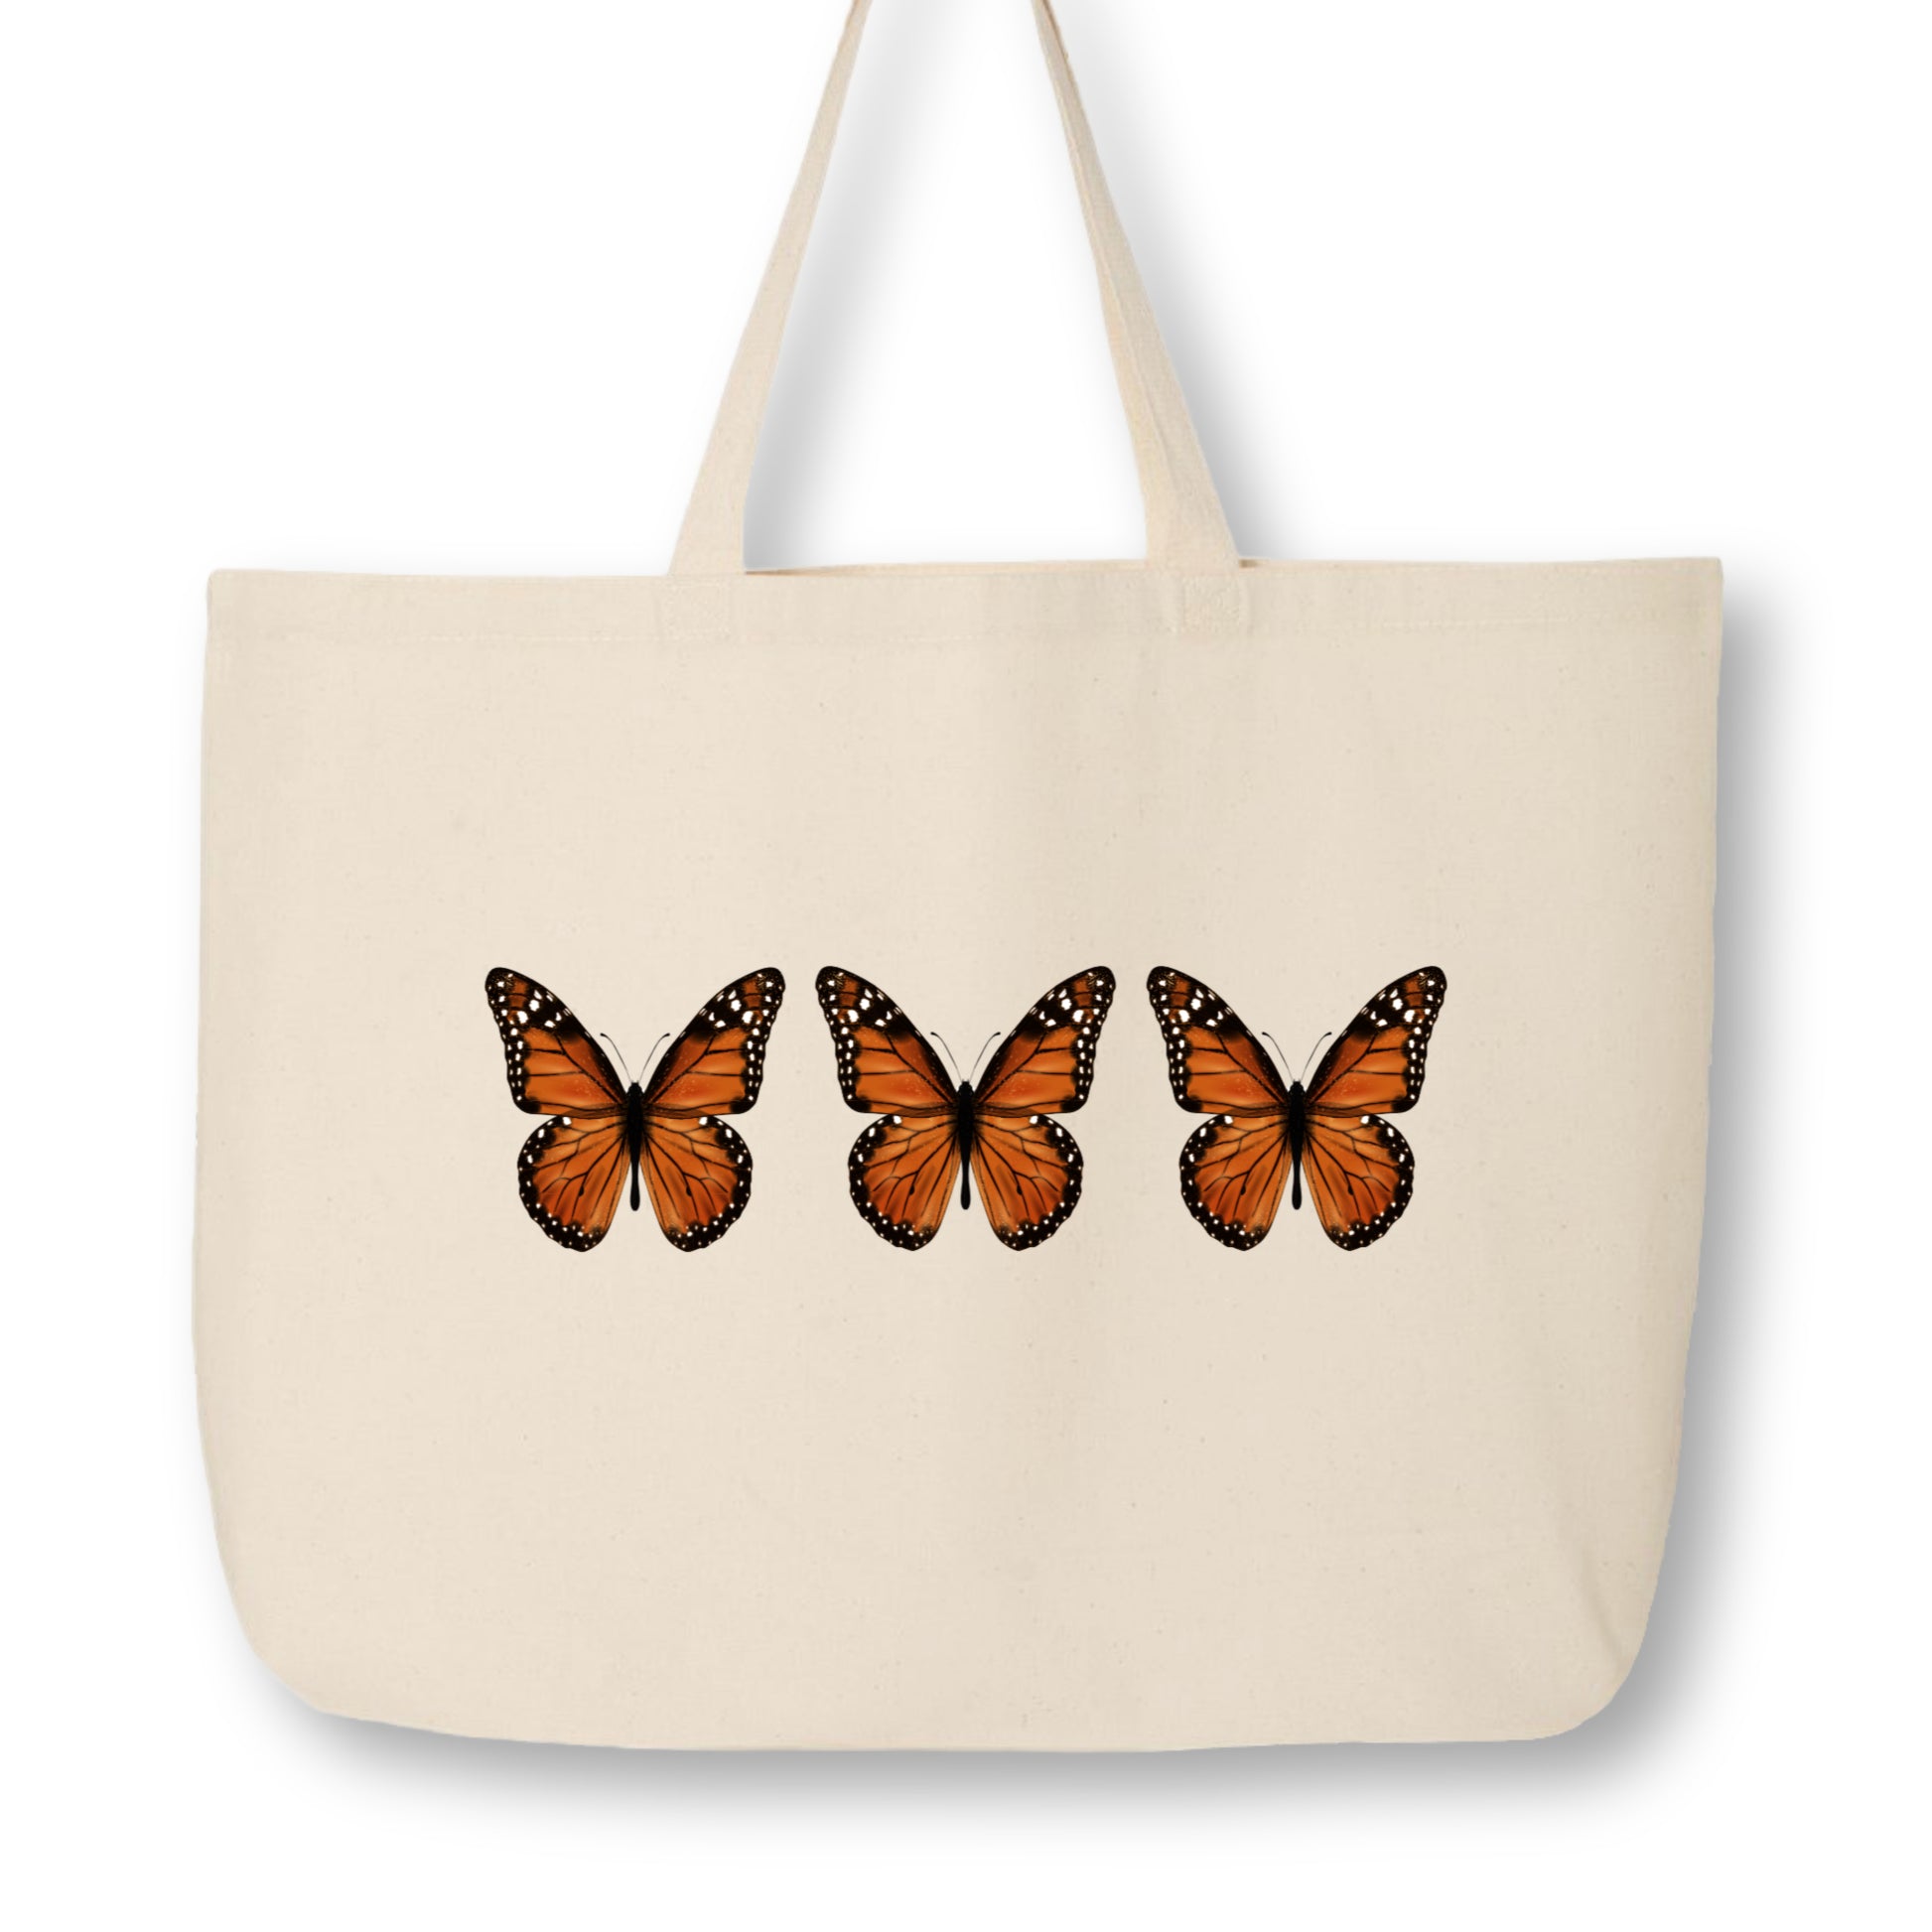 Cute Canvas Tote Bag, Butterflies, Tote Bag with Zipper, Fabric Shoulder Bag